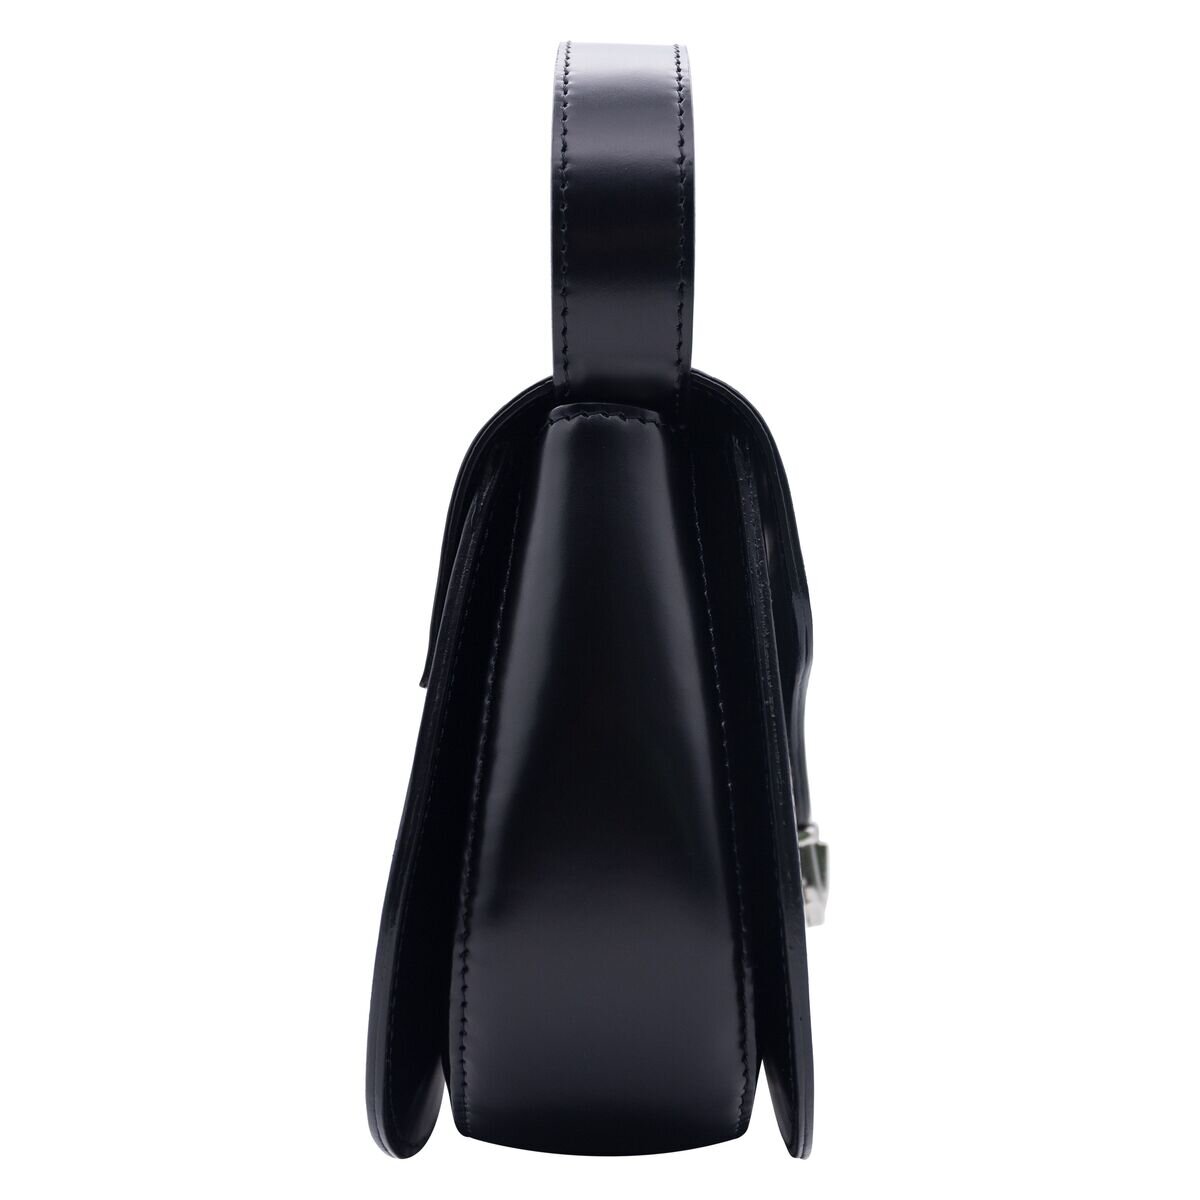 Top-handle saddle handbag in black